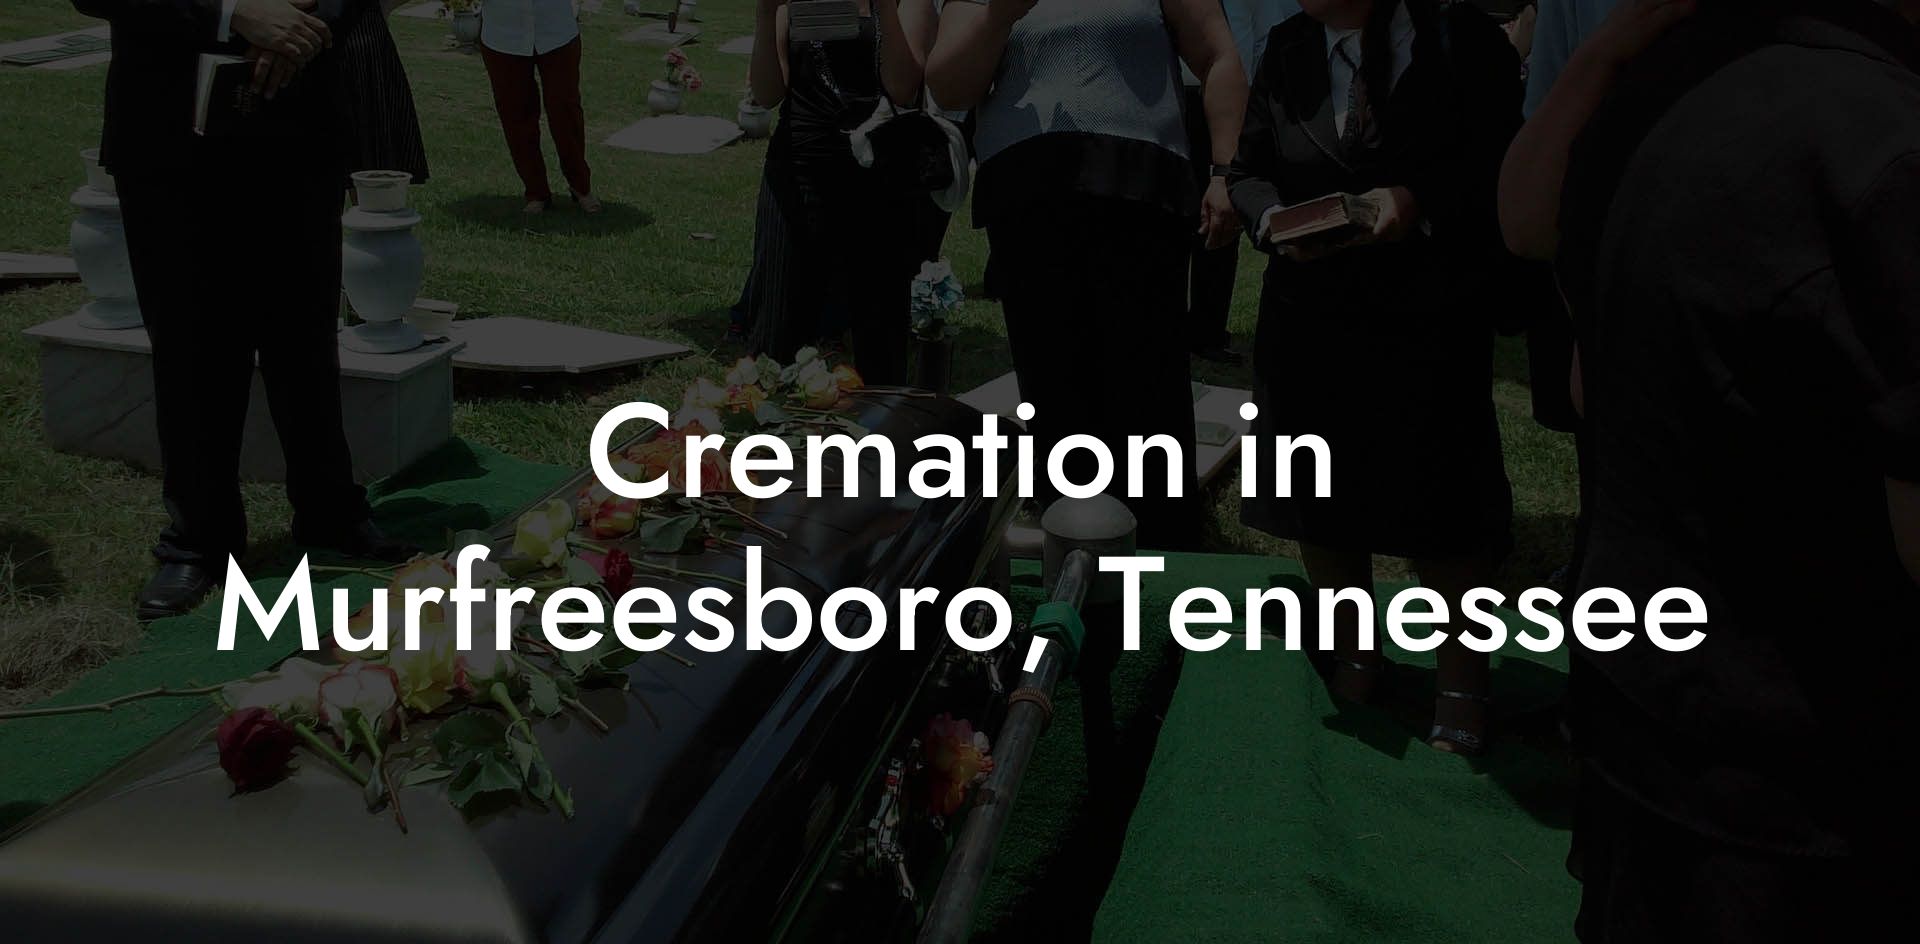 Cremation in Murfreesboro, Tennessee